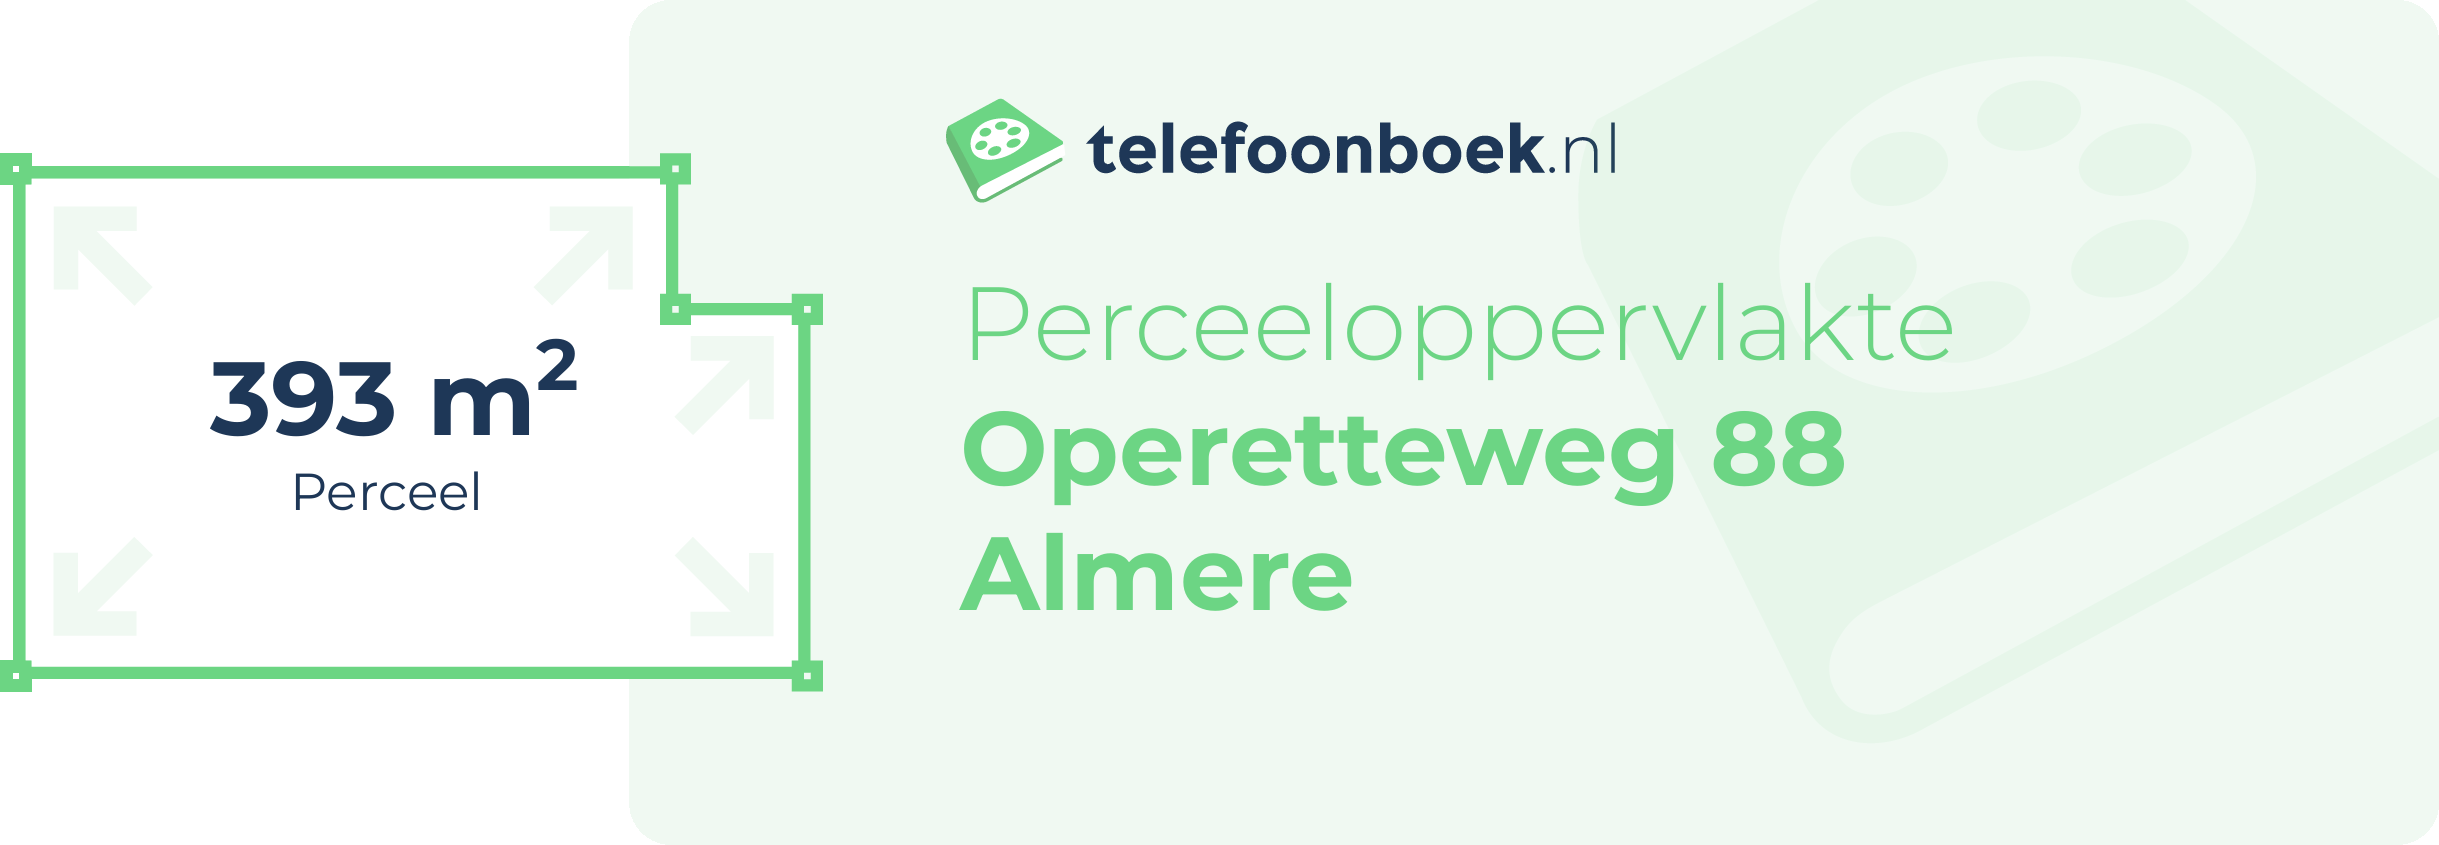 Perceeloppervlakte Operetteweg 88 Almere